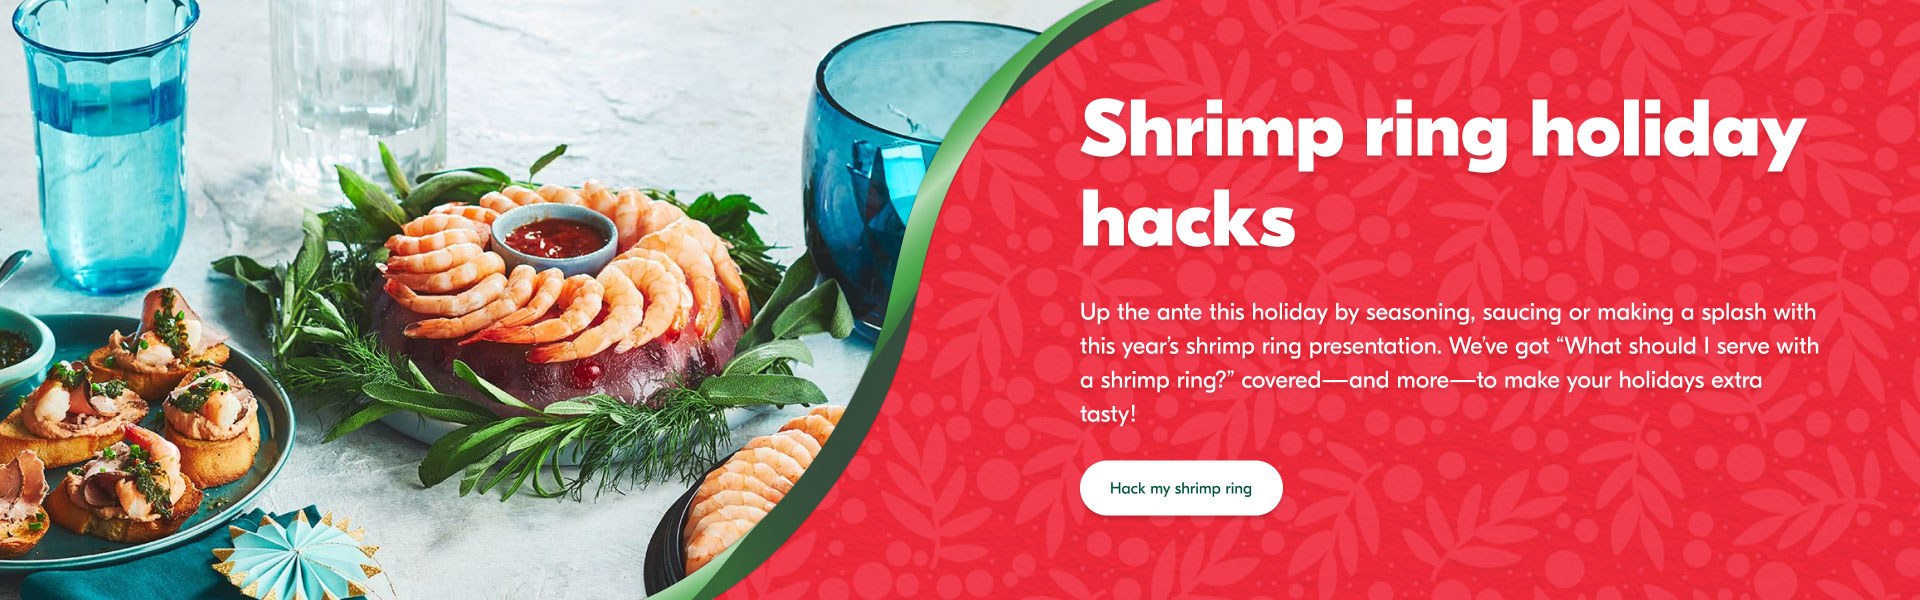 Shrimp ring holiday hacks